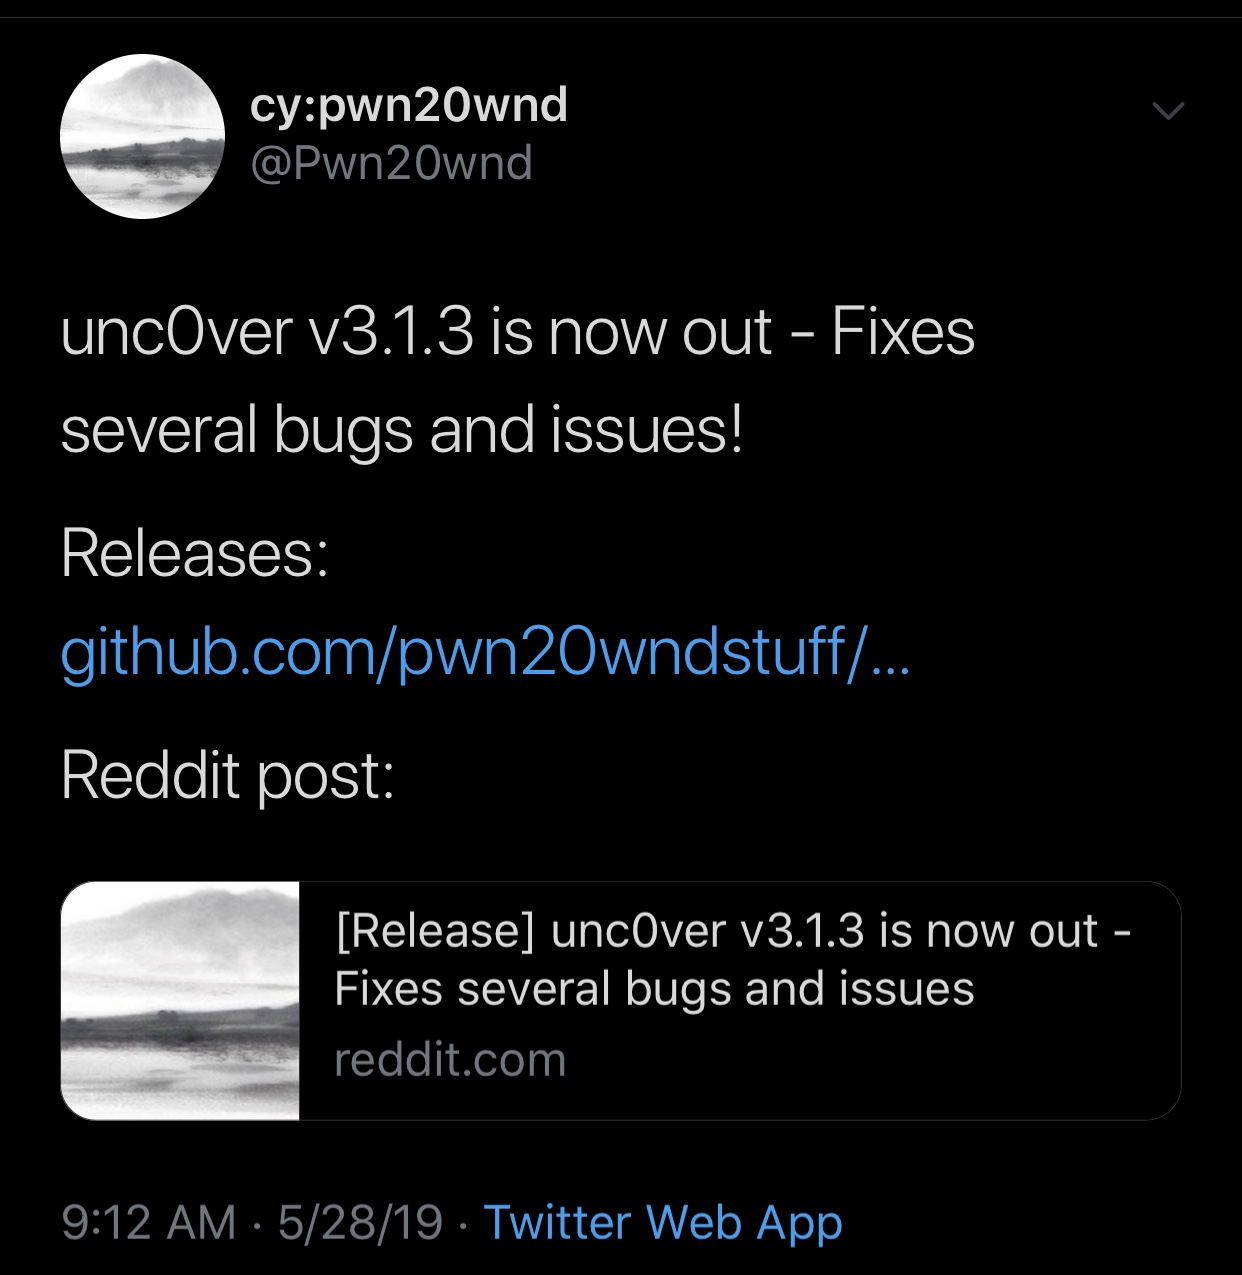 Pwn20wnd Tweet about unc0ver v3.1.3